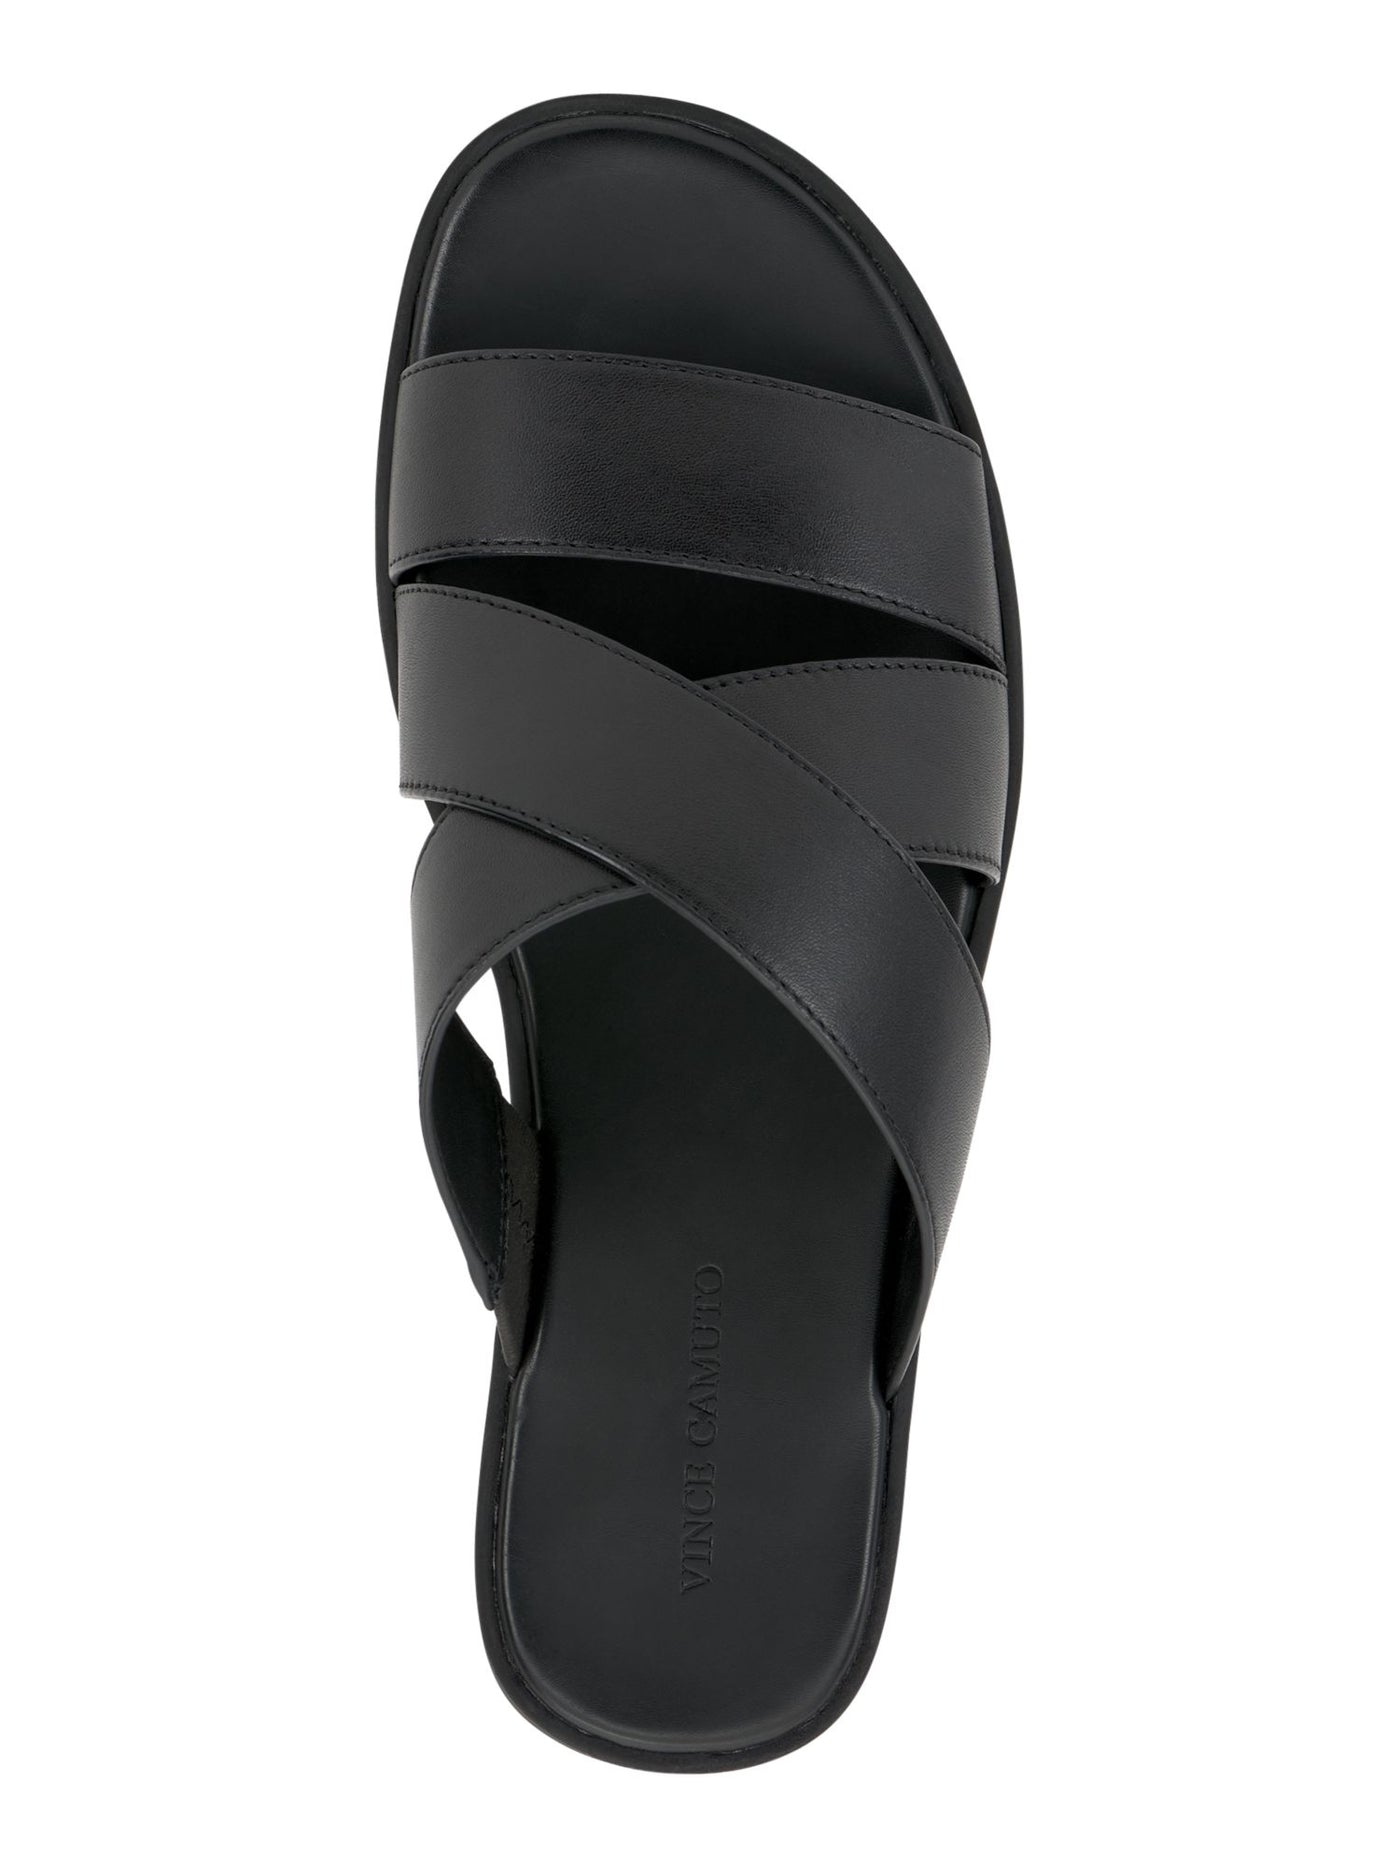 VINCE CAMUTO Mens Black Crisscross Upper Straps Goring Padded Waely Open Toe Slip On Leather Slide Sandals Shoes 12 M